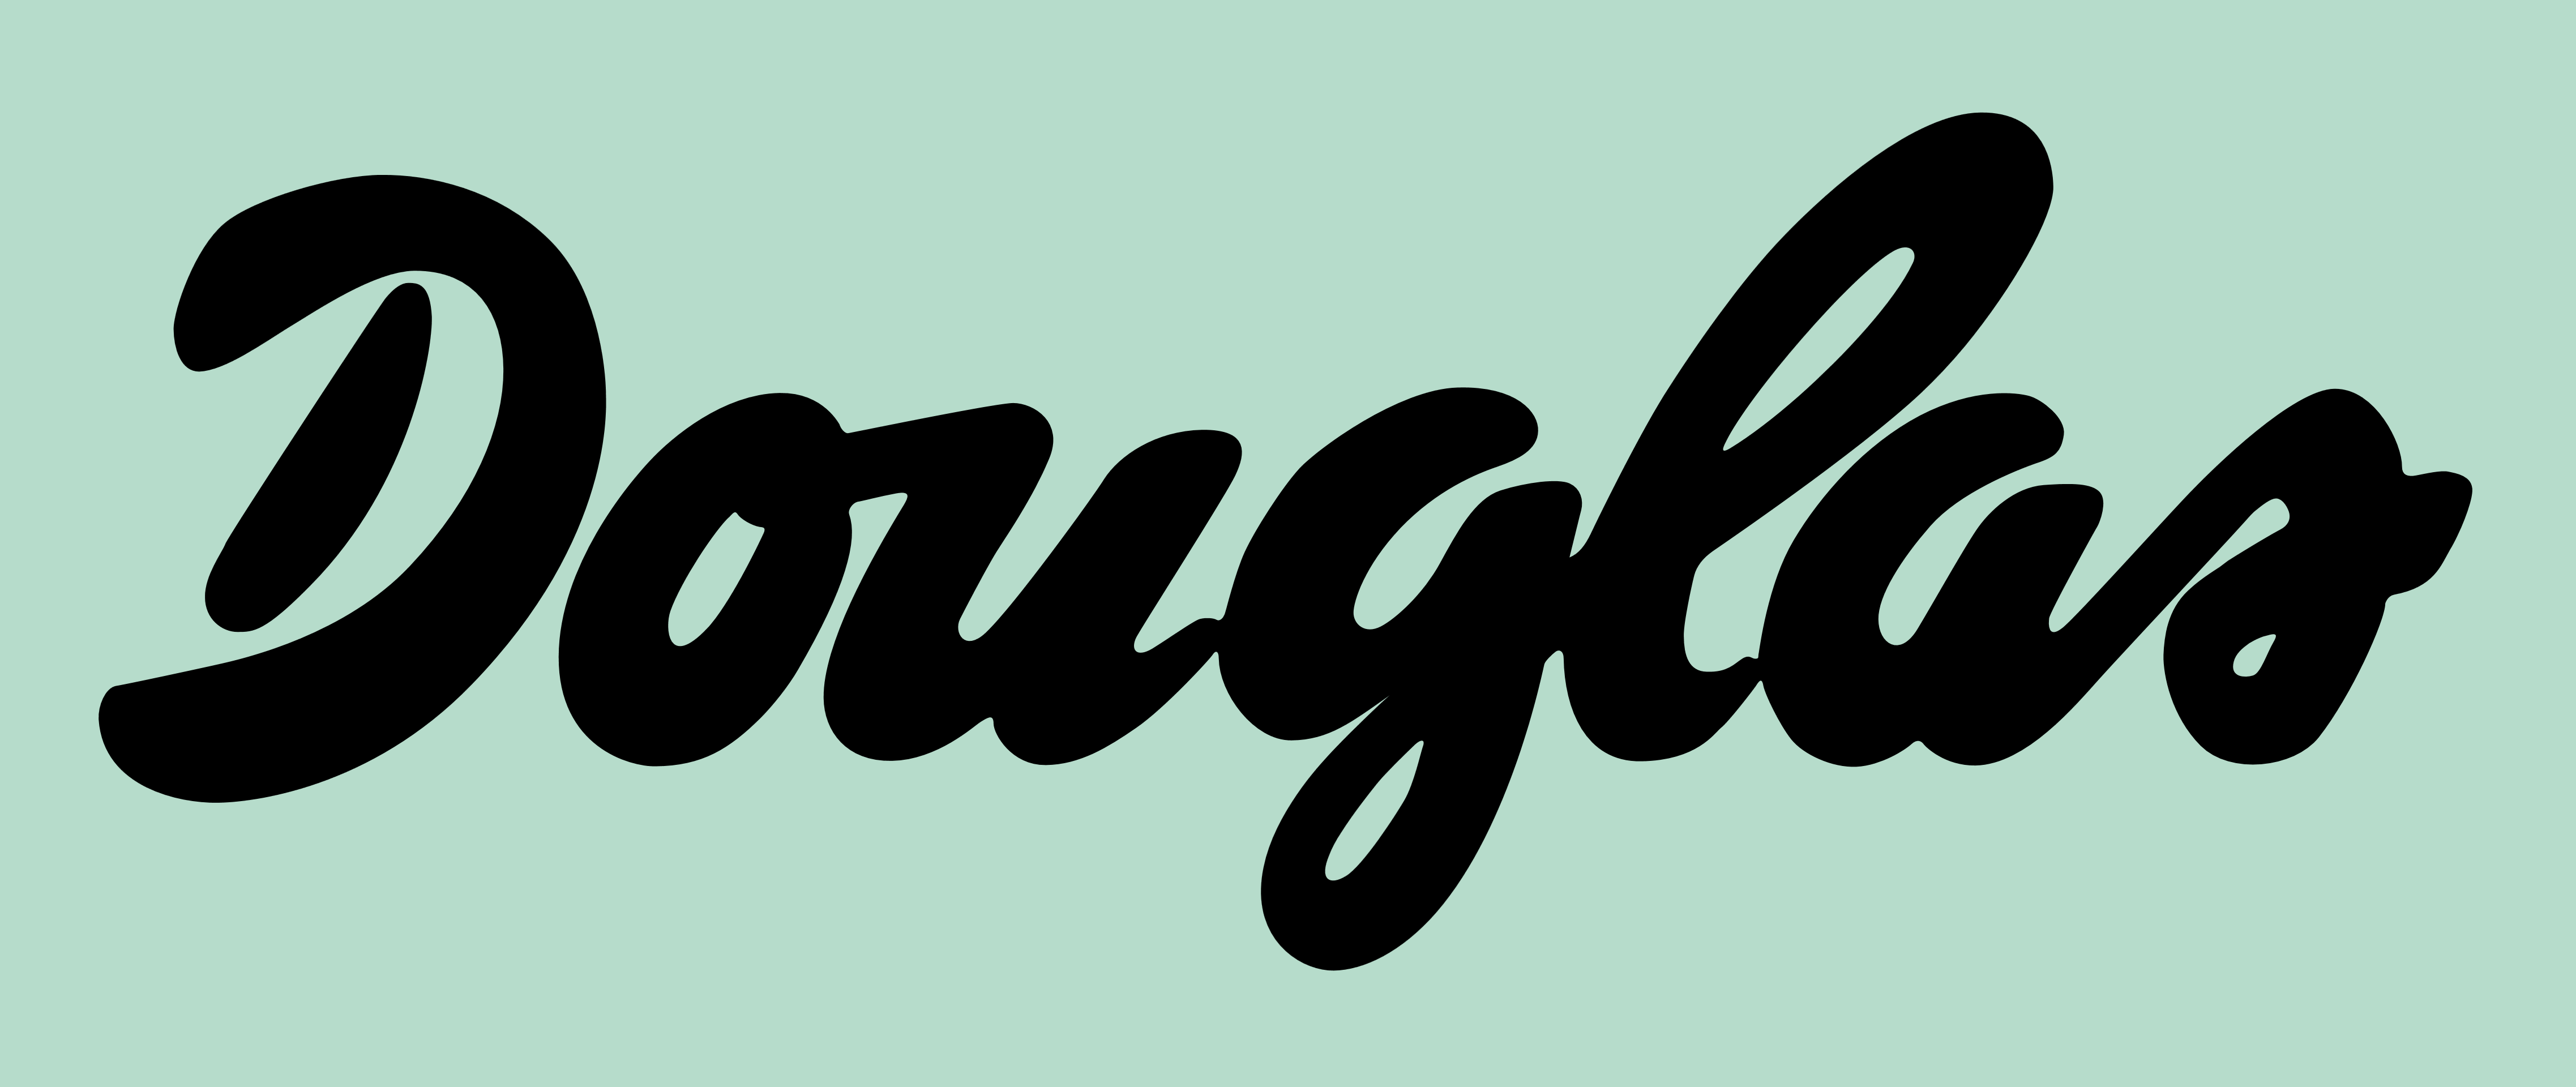 Douglas Logo - Douglas – Logos, brands and logotypes